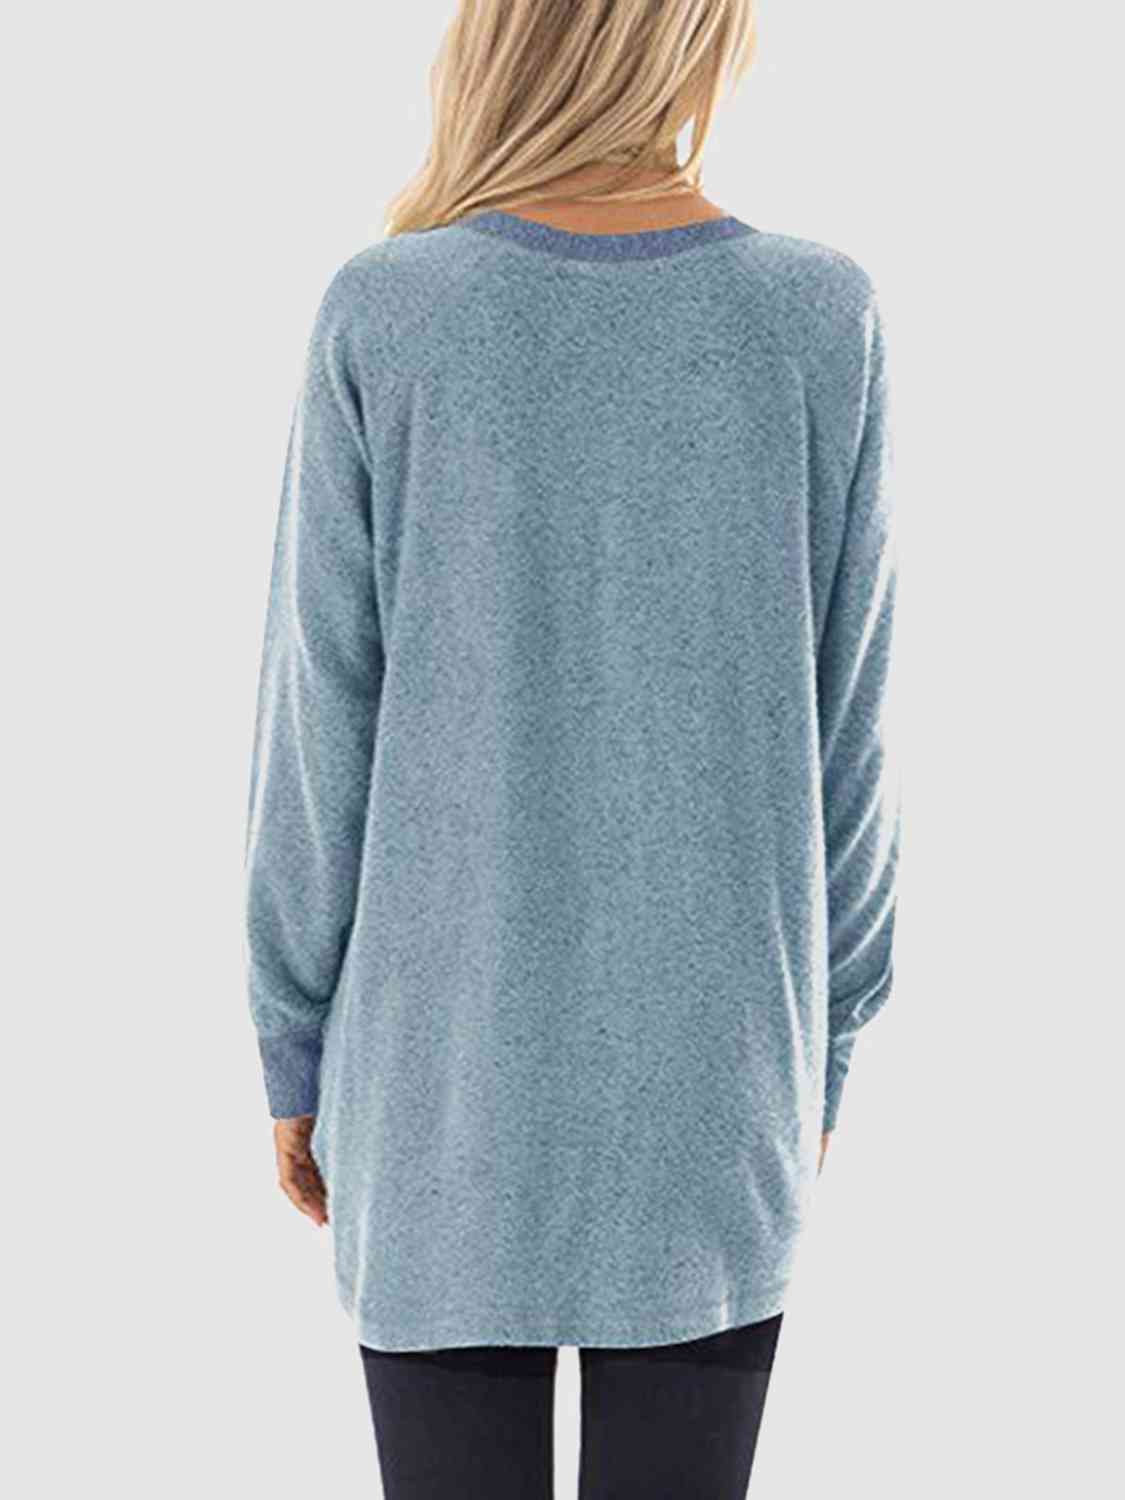 Graphic Round Neck Sweatshirt with Pockets BLUE ZONE PLANET